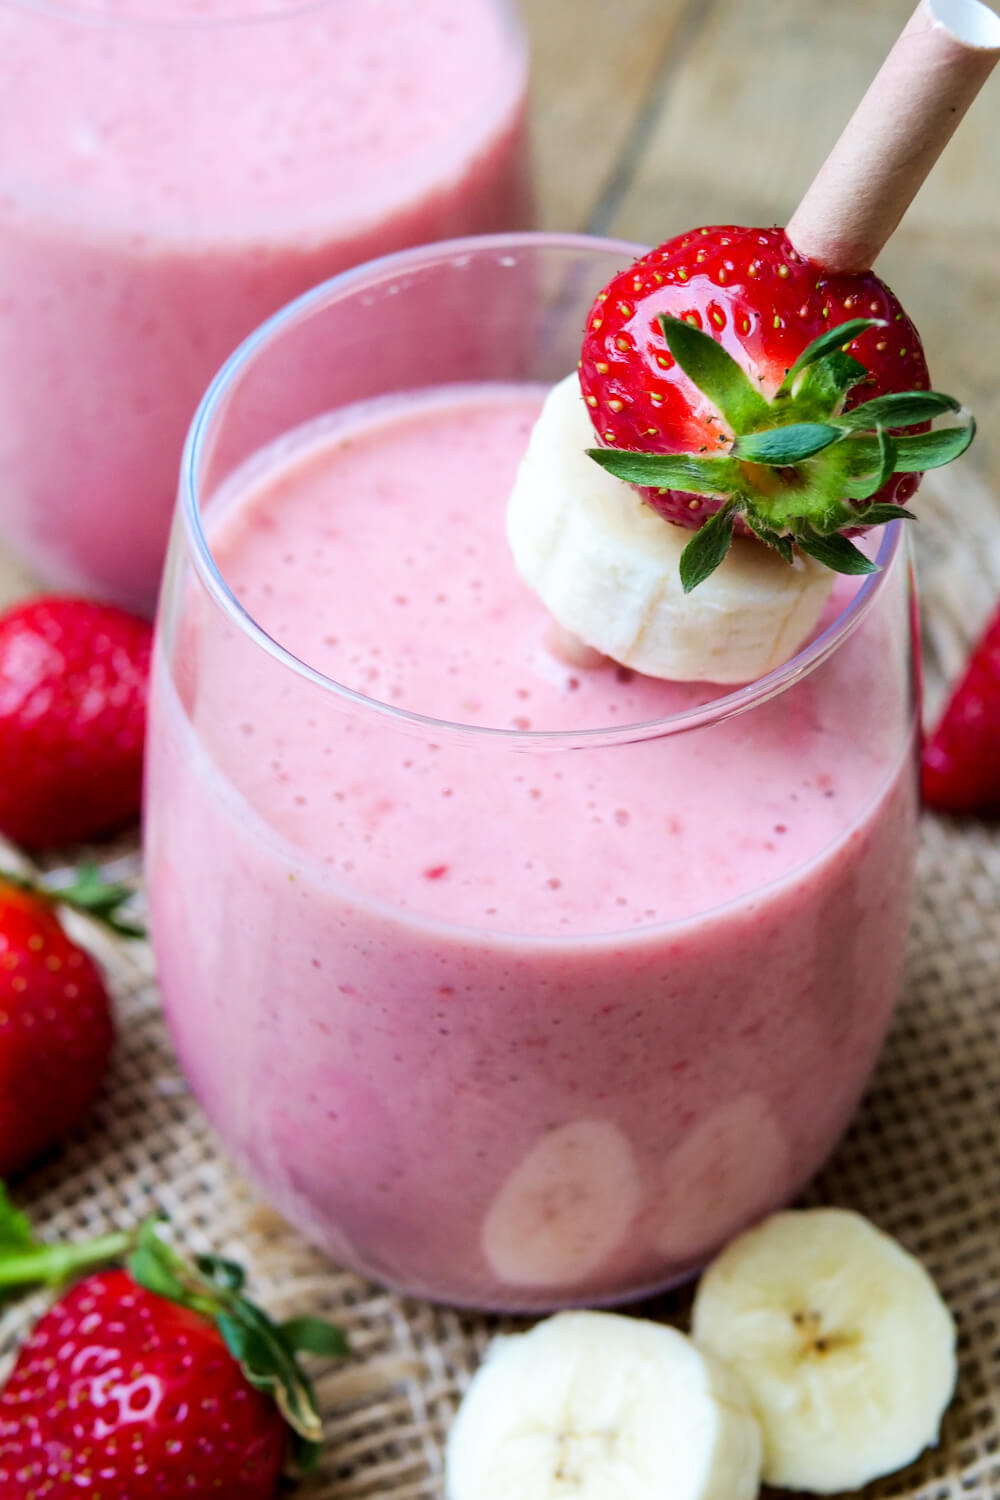 Erdbeer-Smoothie mit Erdbeeren, Joghurt und Banane